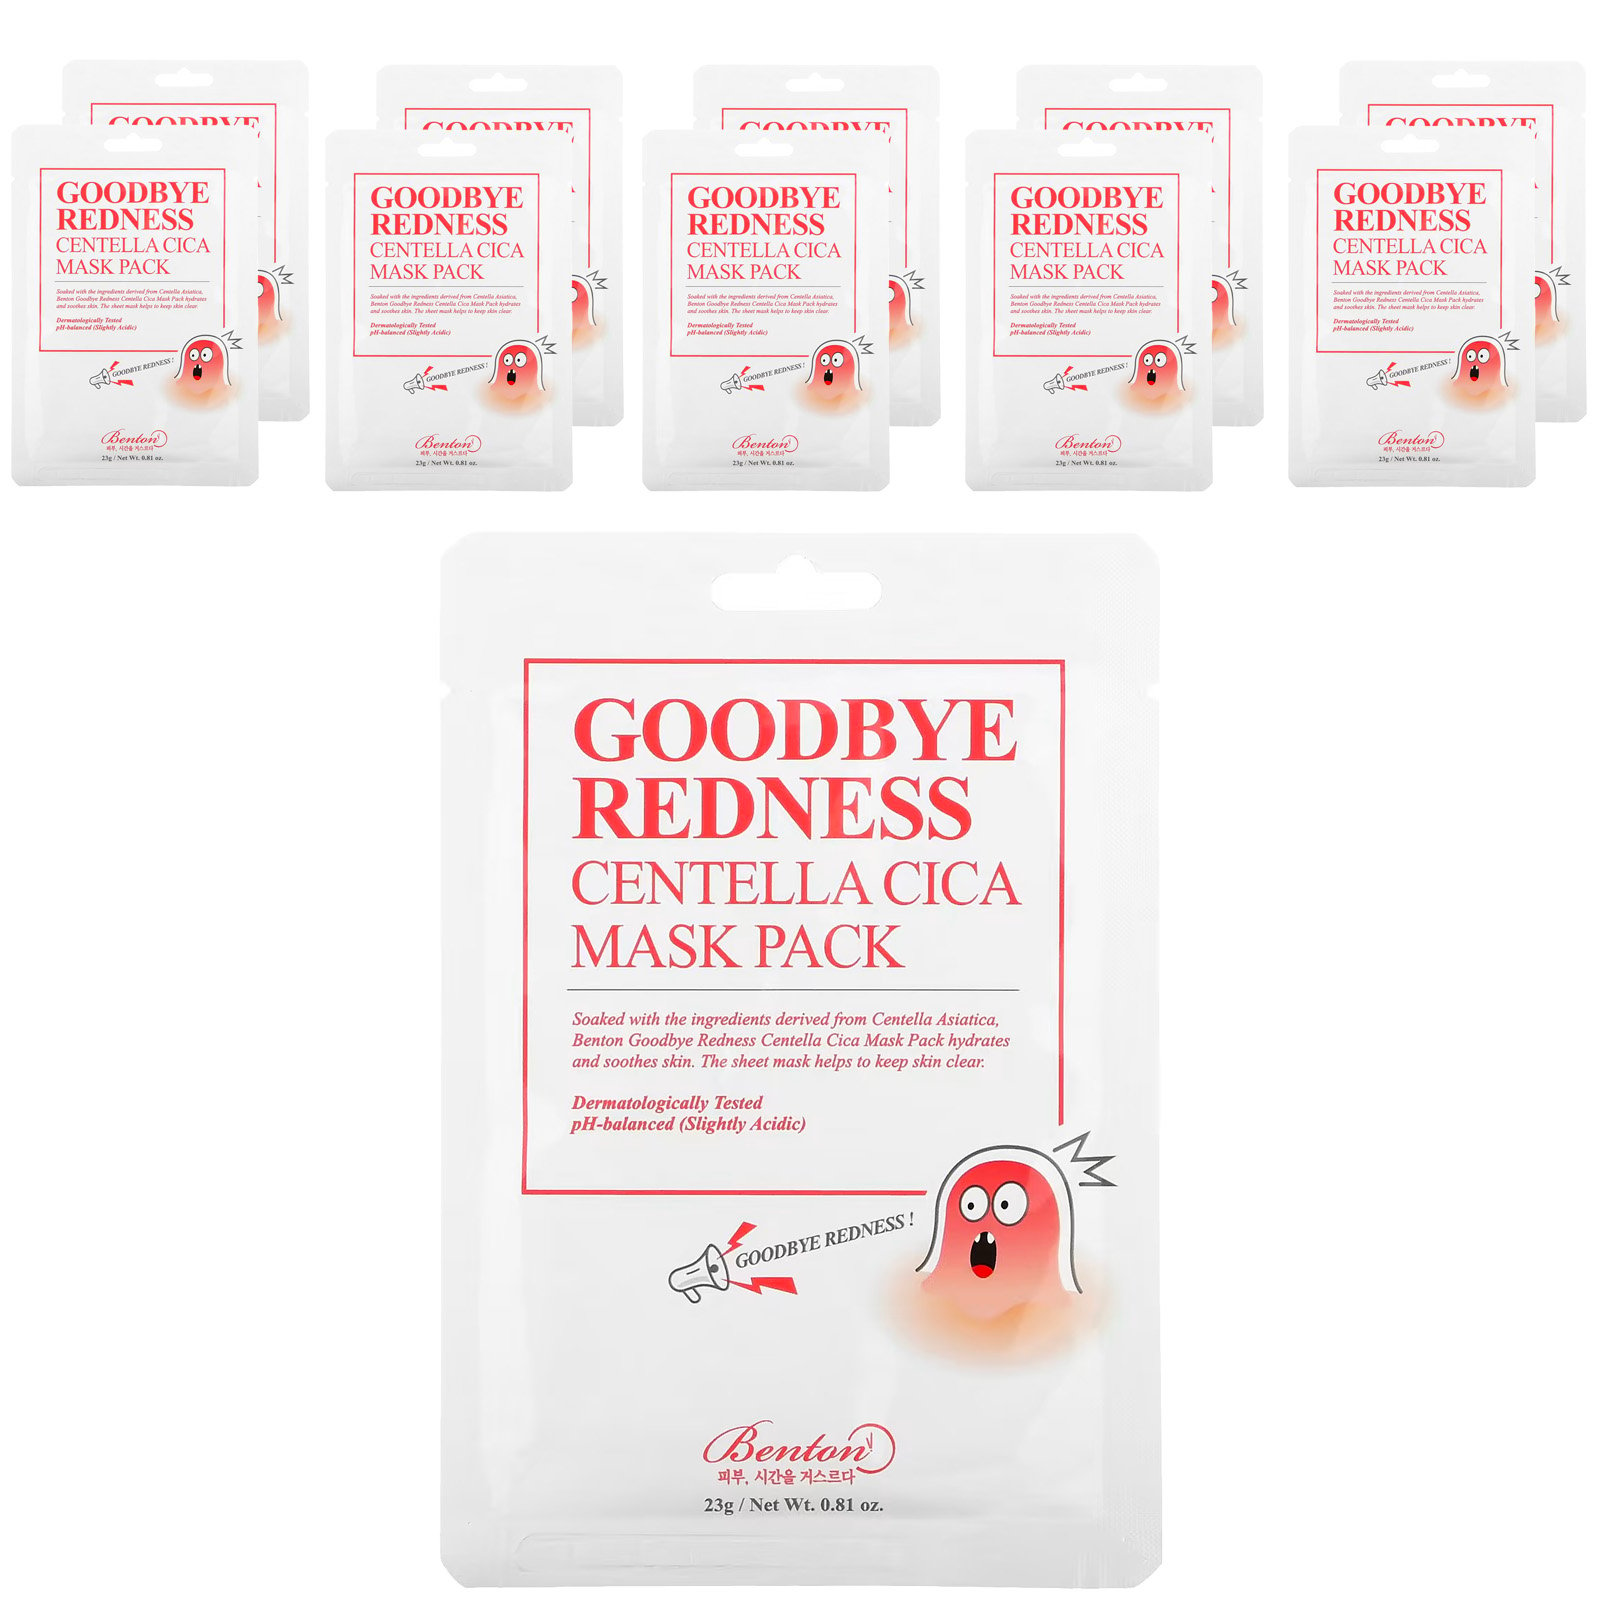 10 Goodbye Pack, Redness Centella Masks Mask Benton